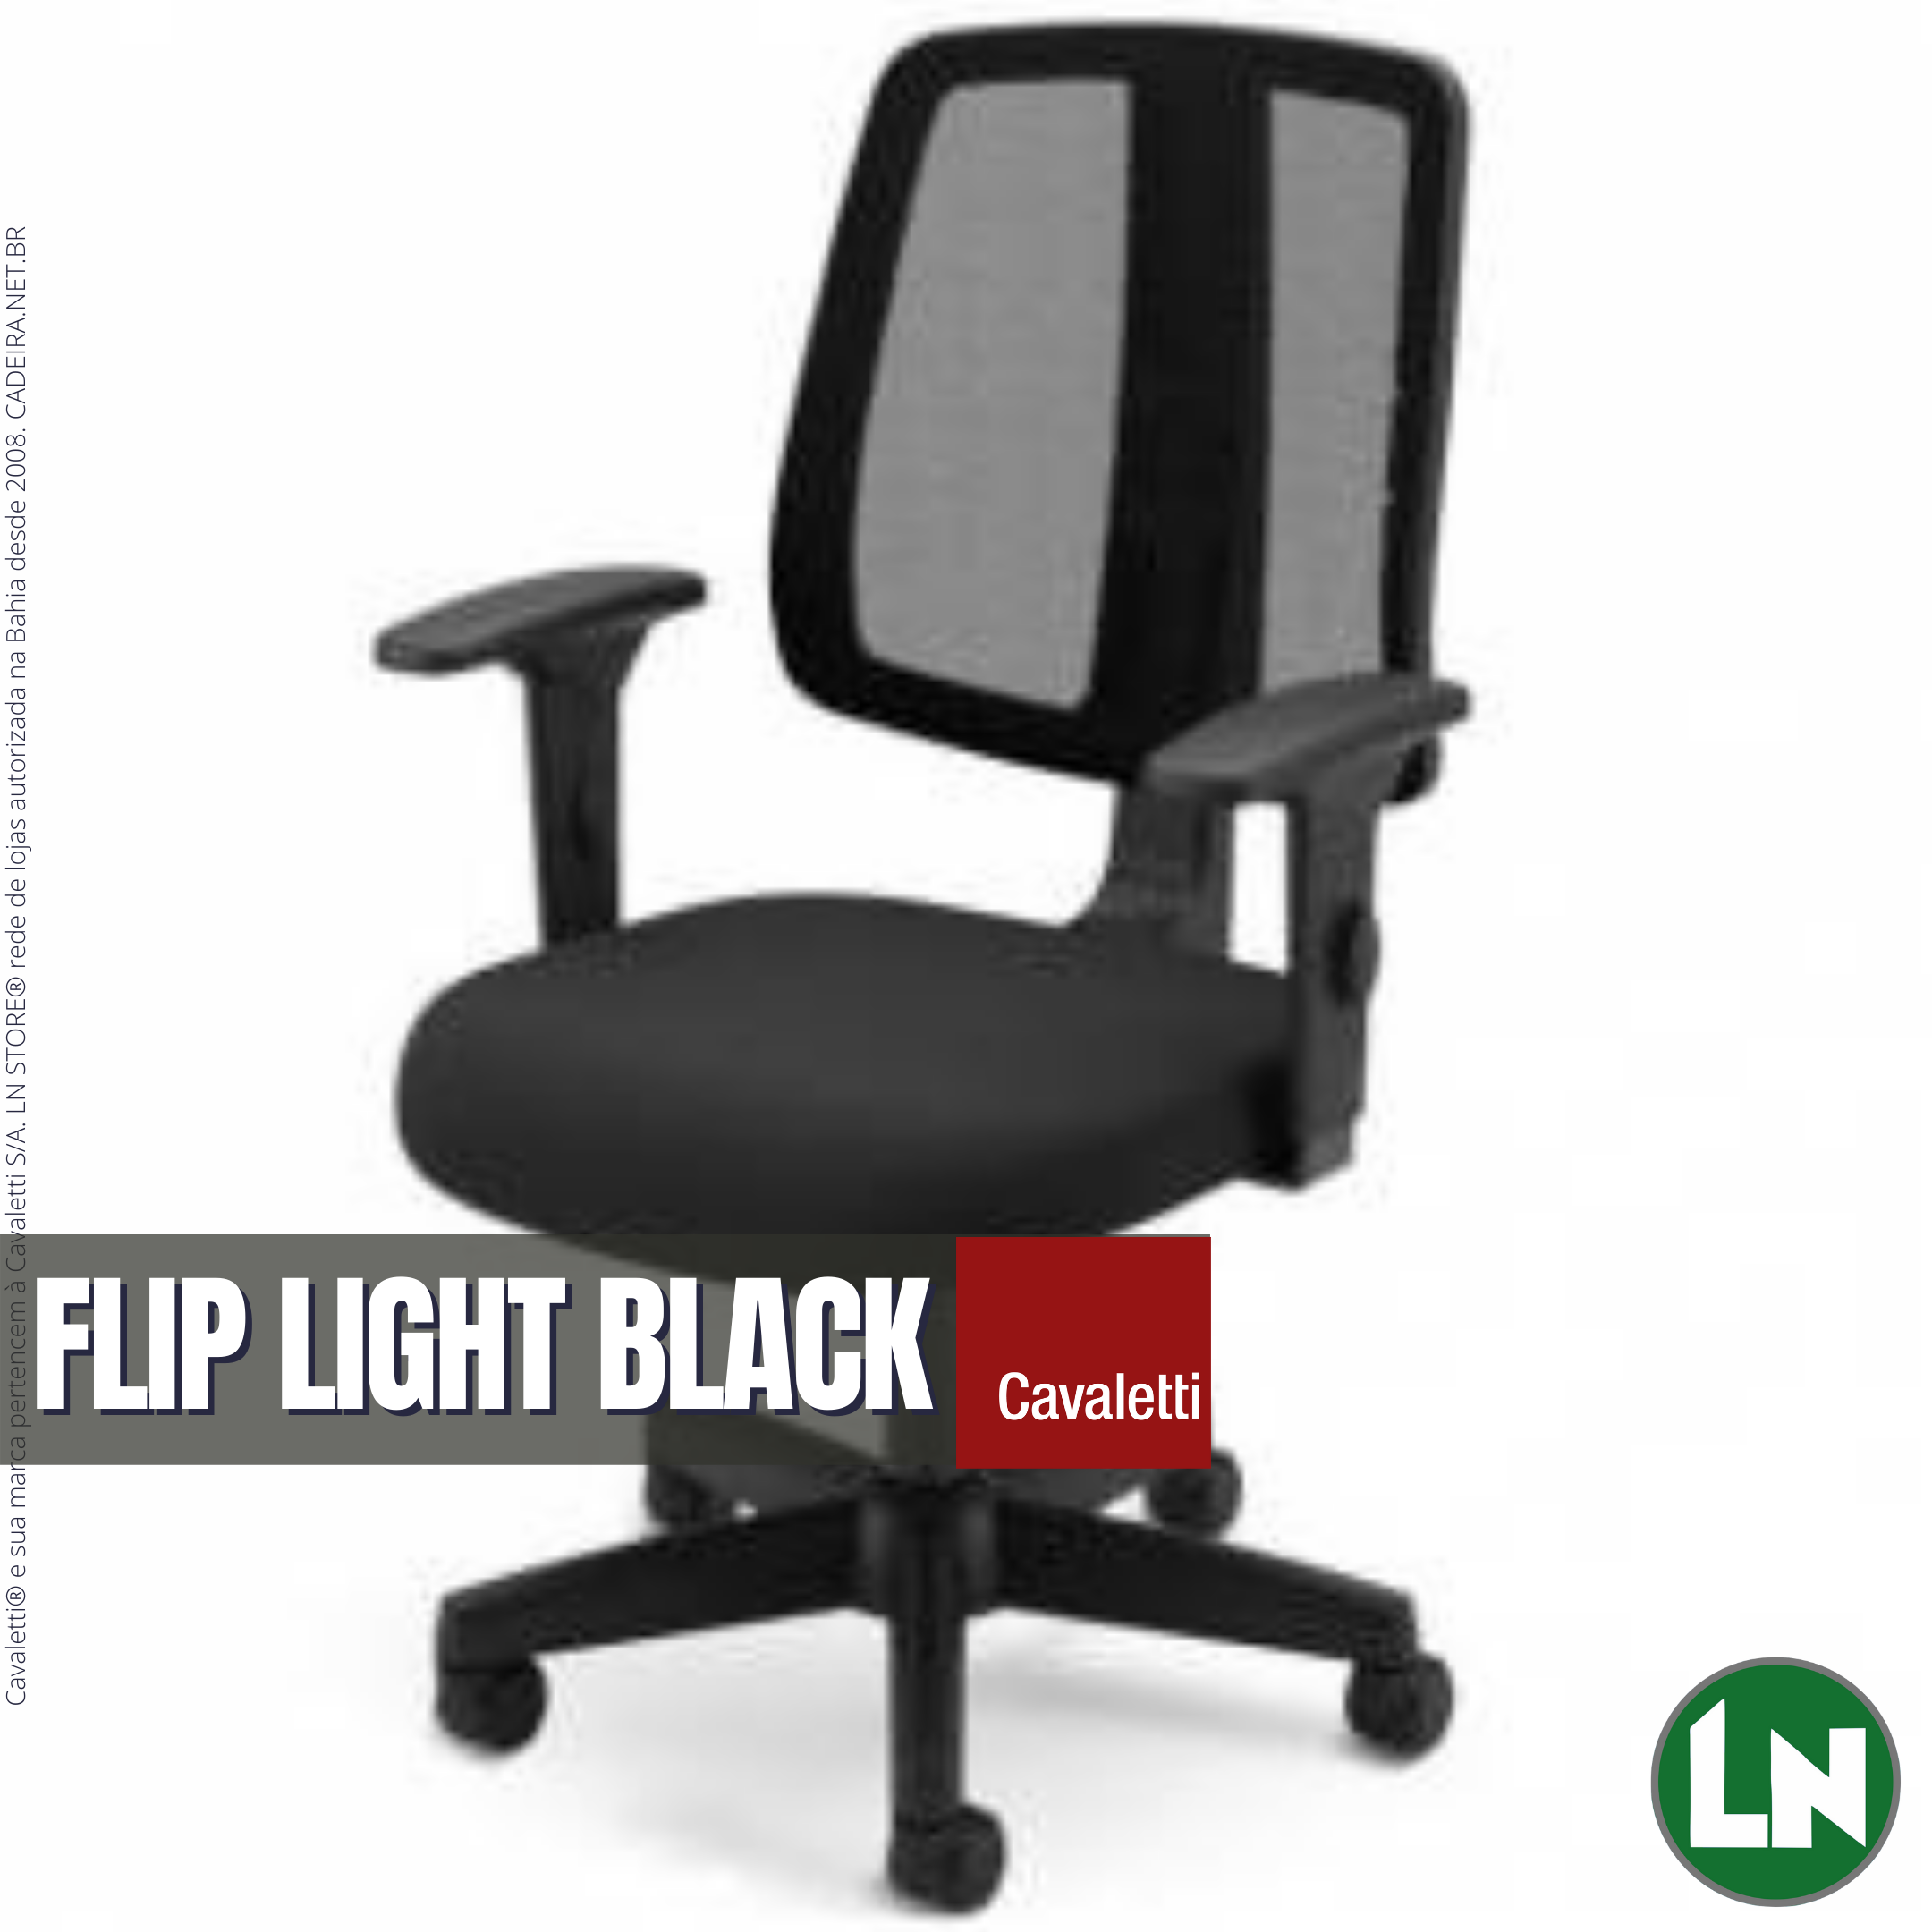 Cavaletti® Flip Light Black [Entrega Super-Rápida]